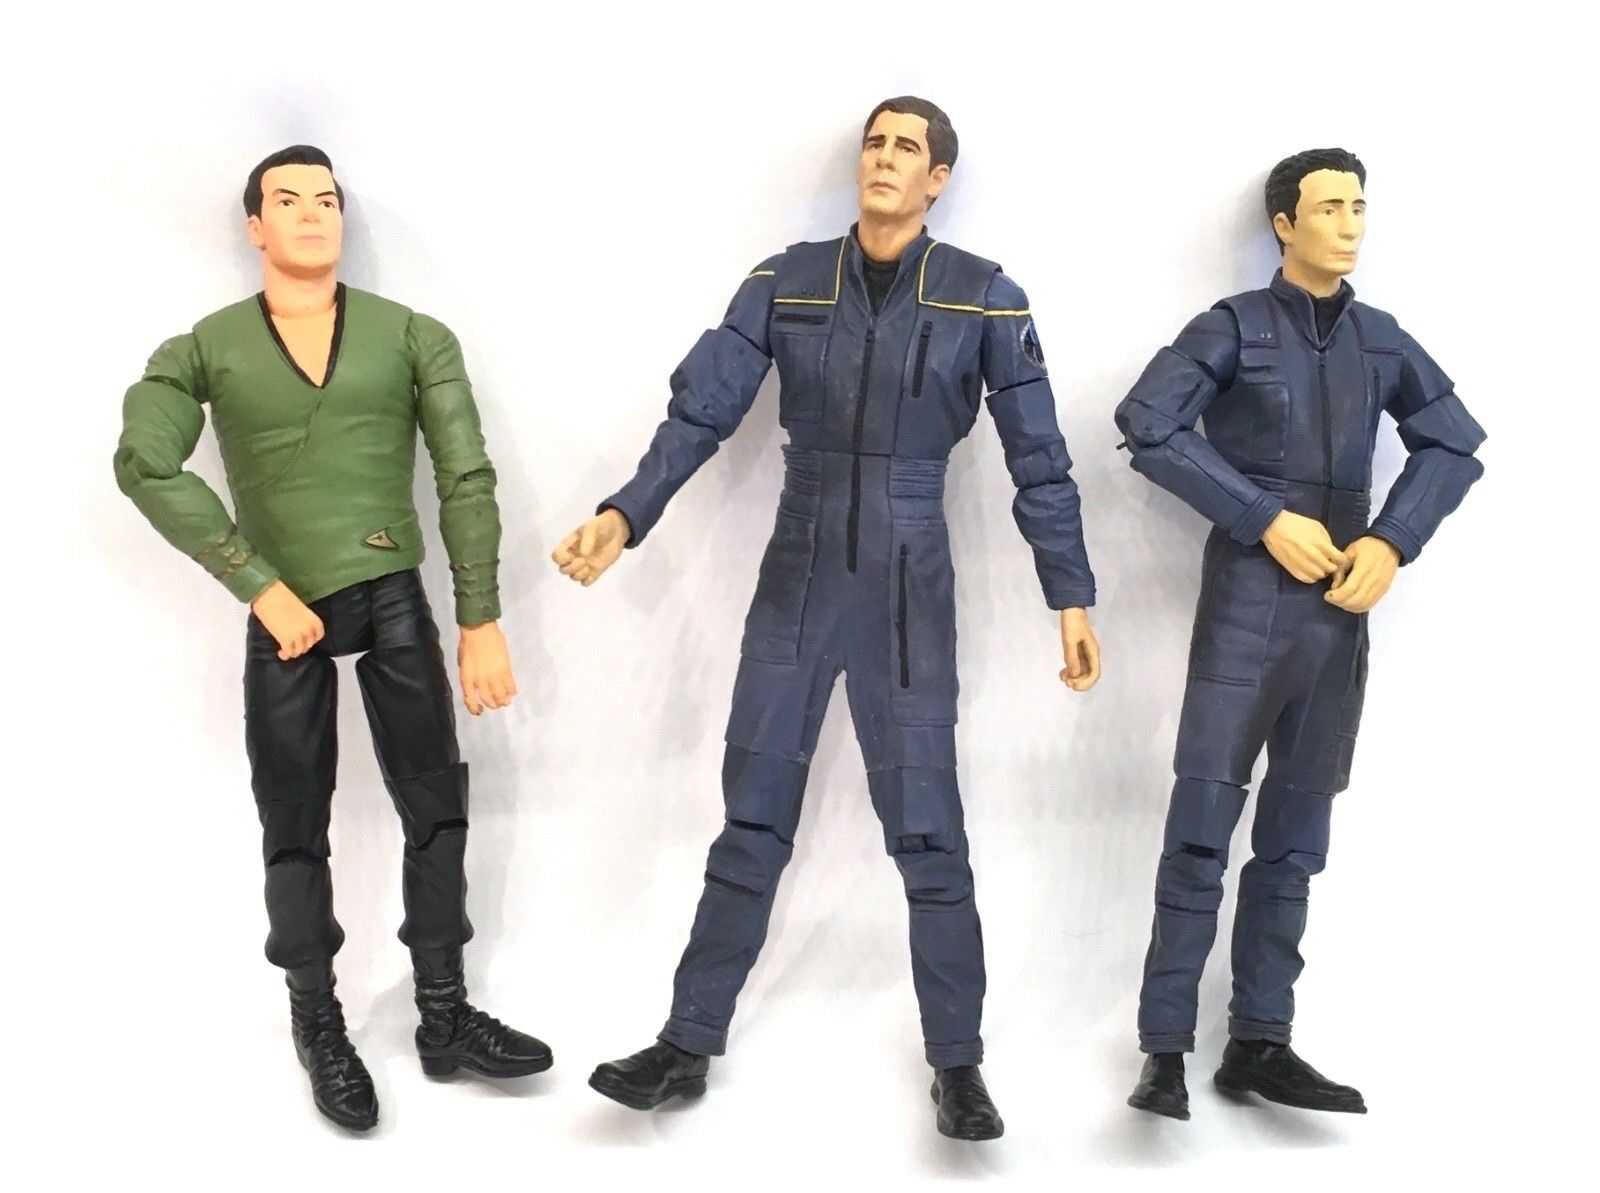 Star Trek Enterprise Art Asylum & Diamond Select 7" Action Figures Lot of 3 - $24.99